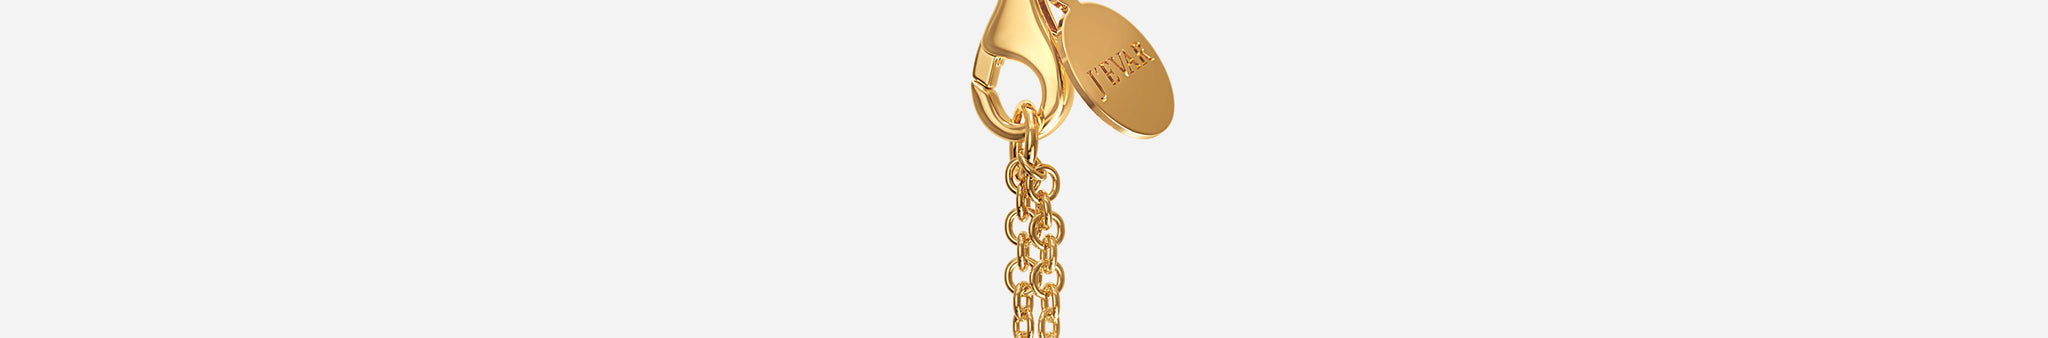 J'EVAR 14kt Yellow Gold Solitaire Diamond Necklace ALTR Lab Grown Bezel Solitaire Diamond Necklace Lock View